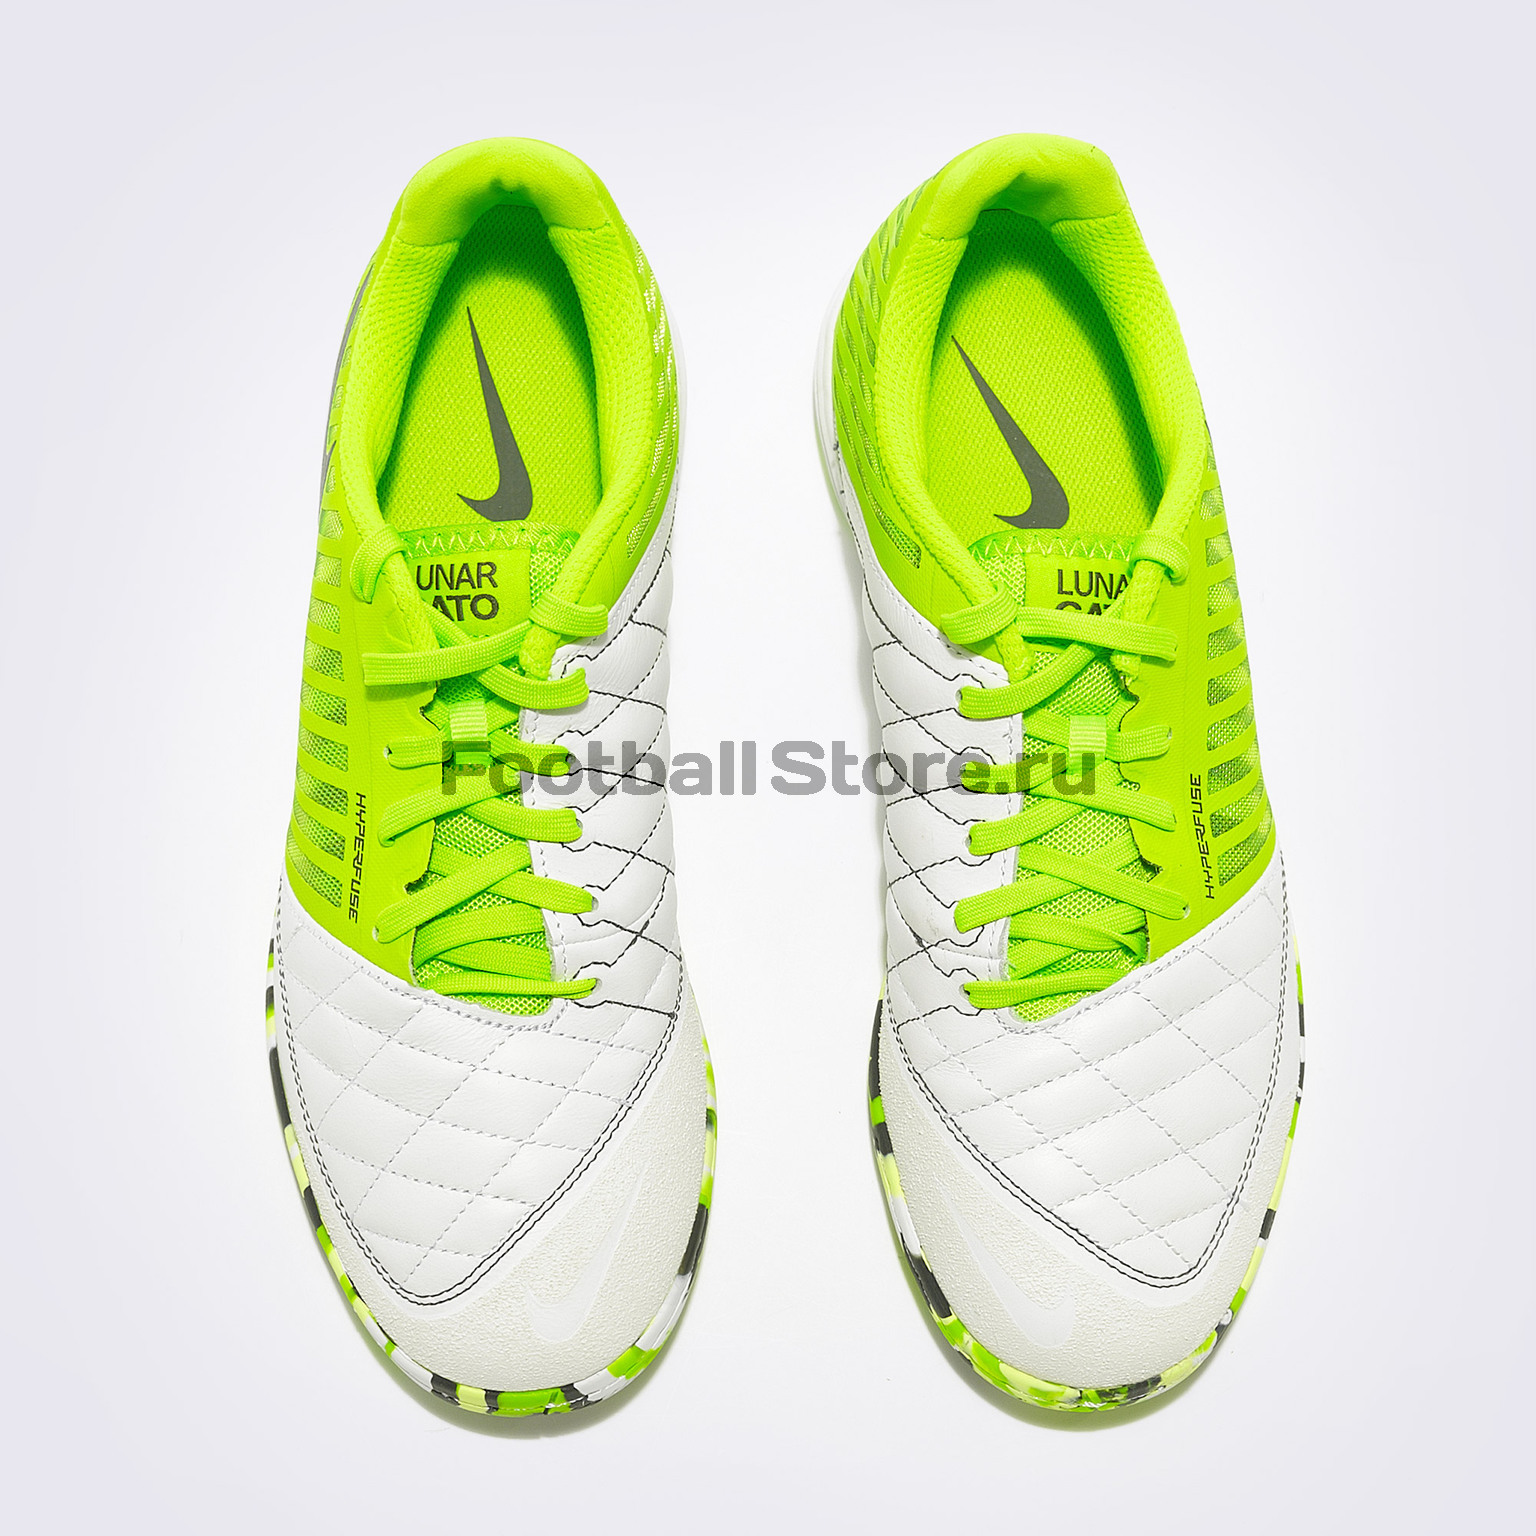 Футзалки Nike LunarGato II 580456-137